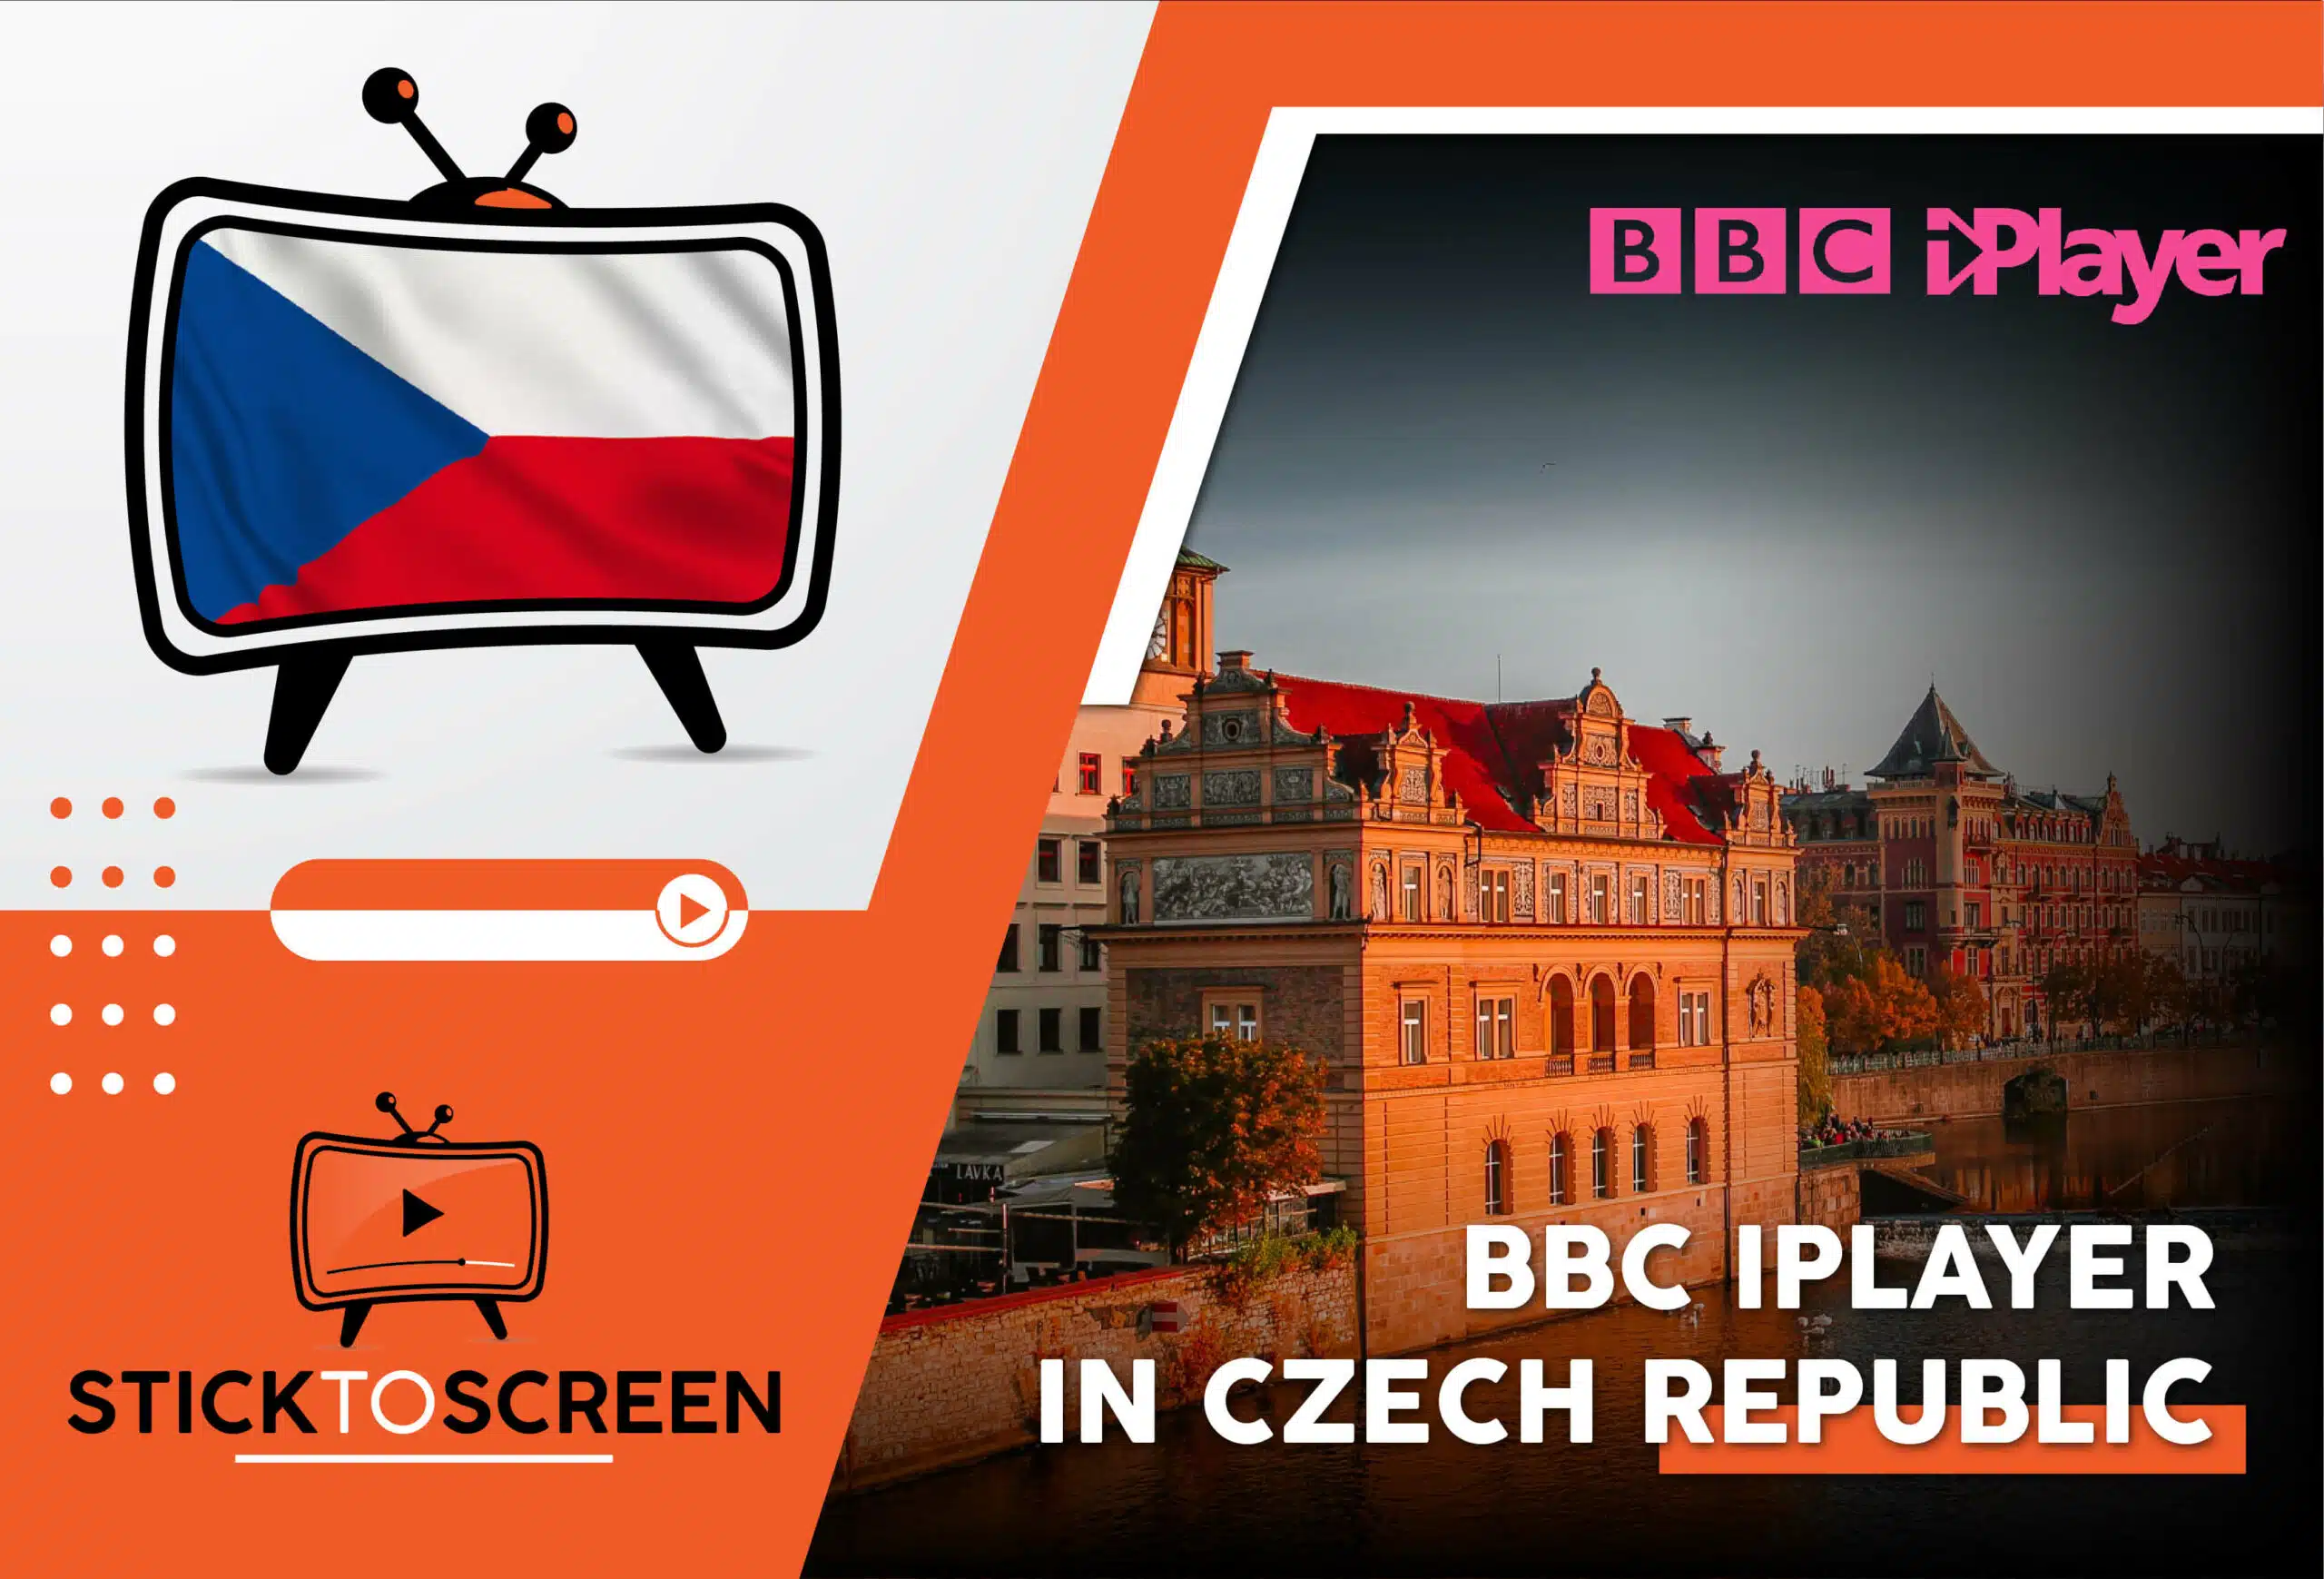 Watch BBC iPlayer in Czech Republic